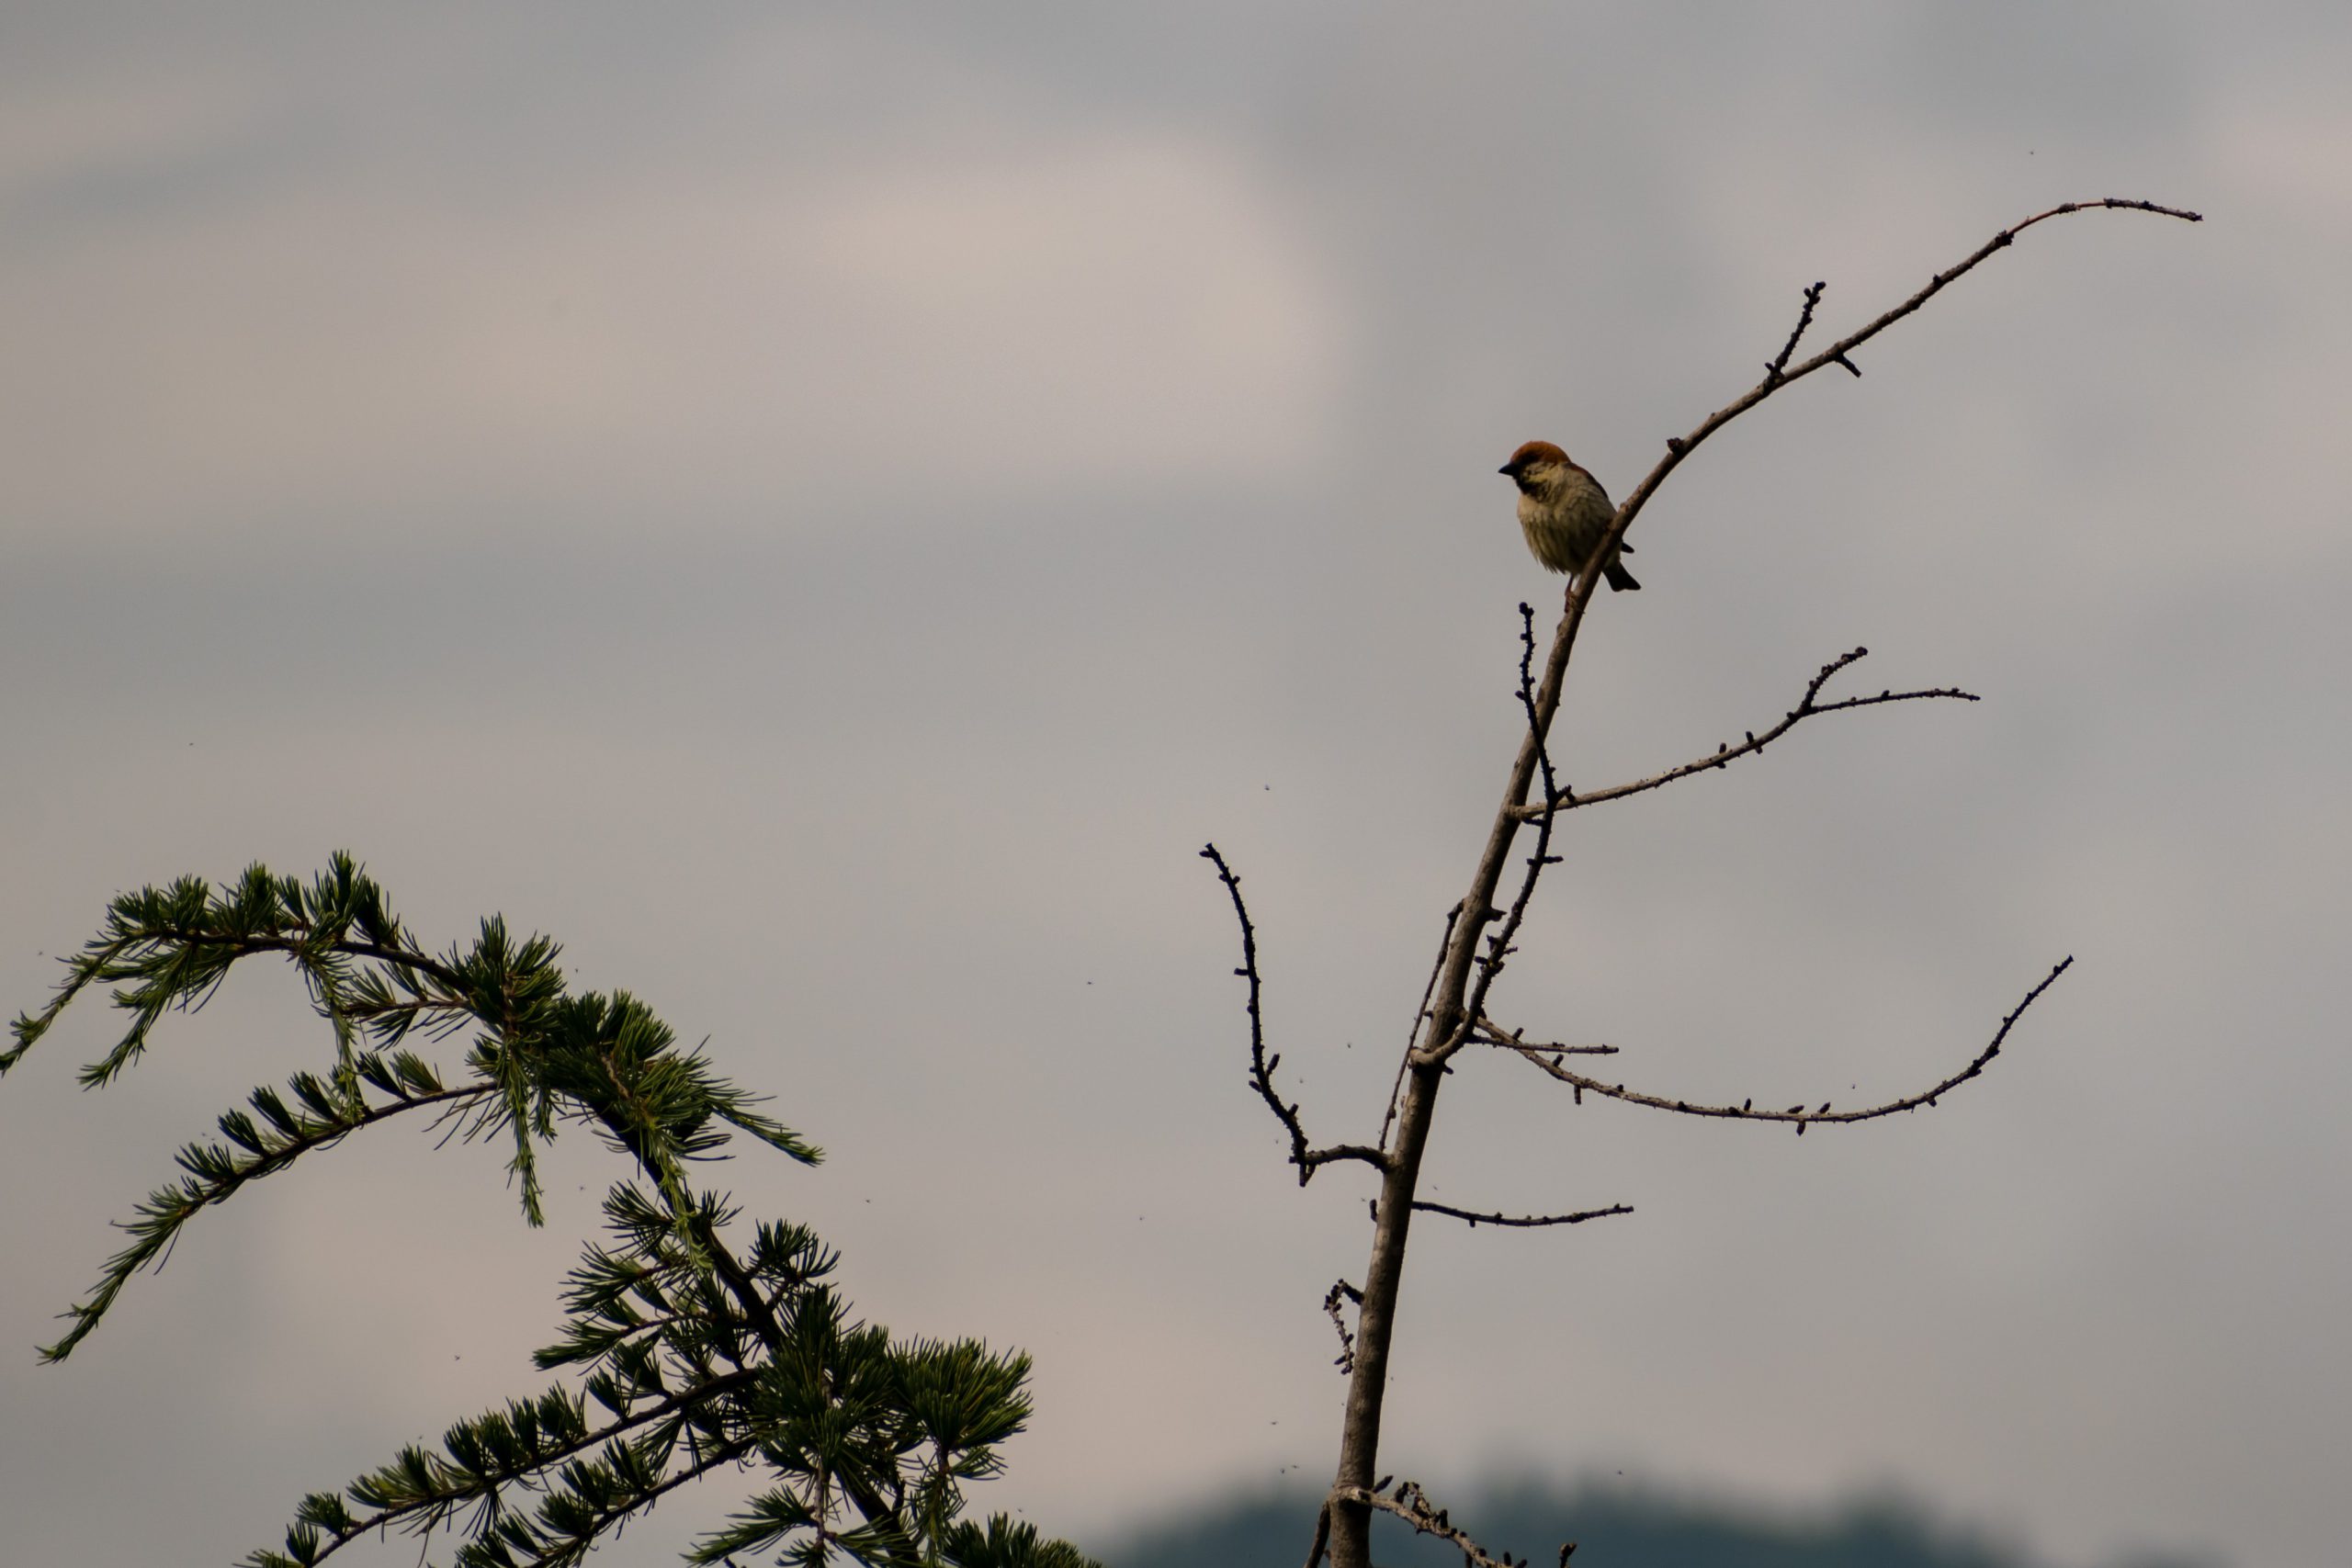 A small bird perches itself upon a tree branch